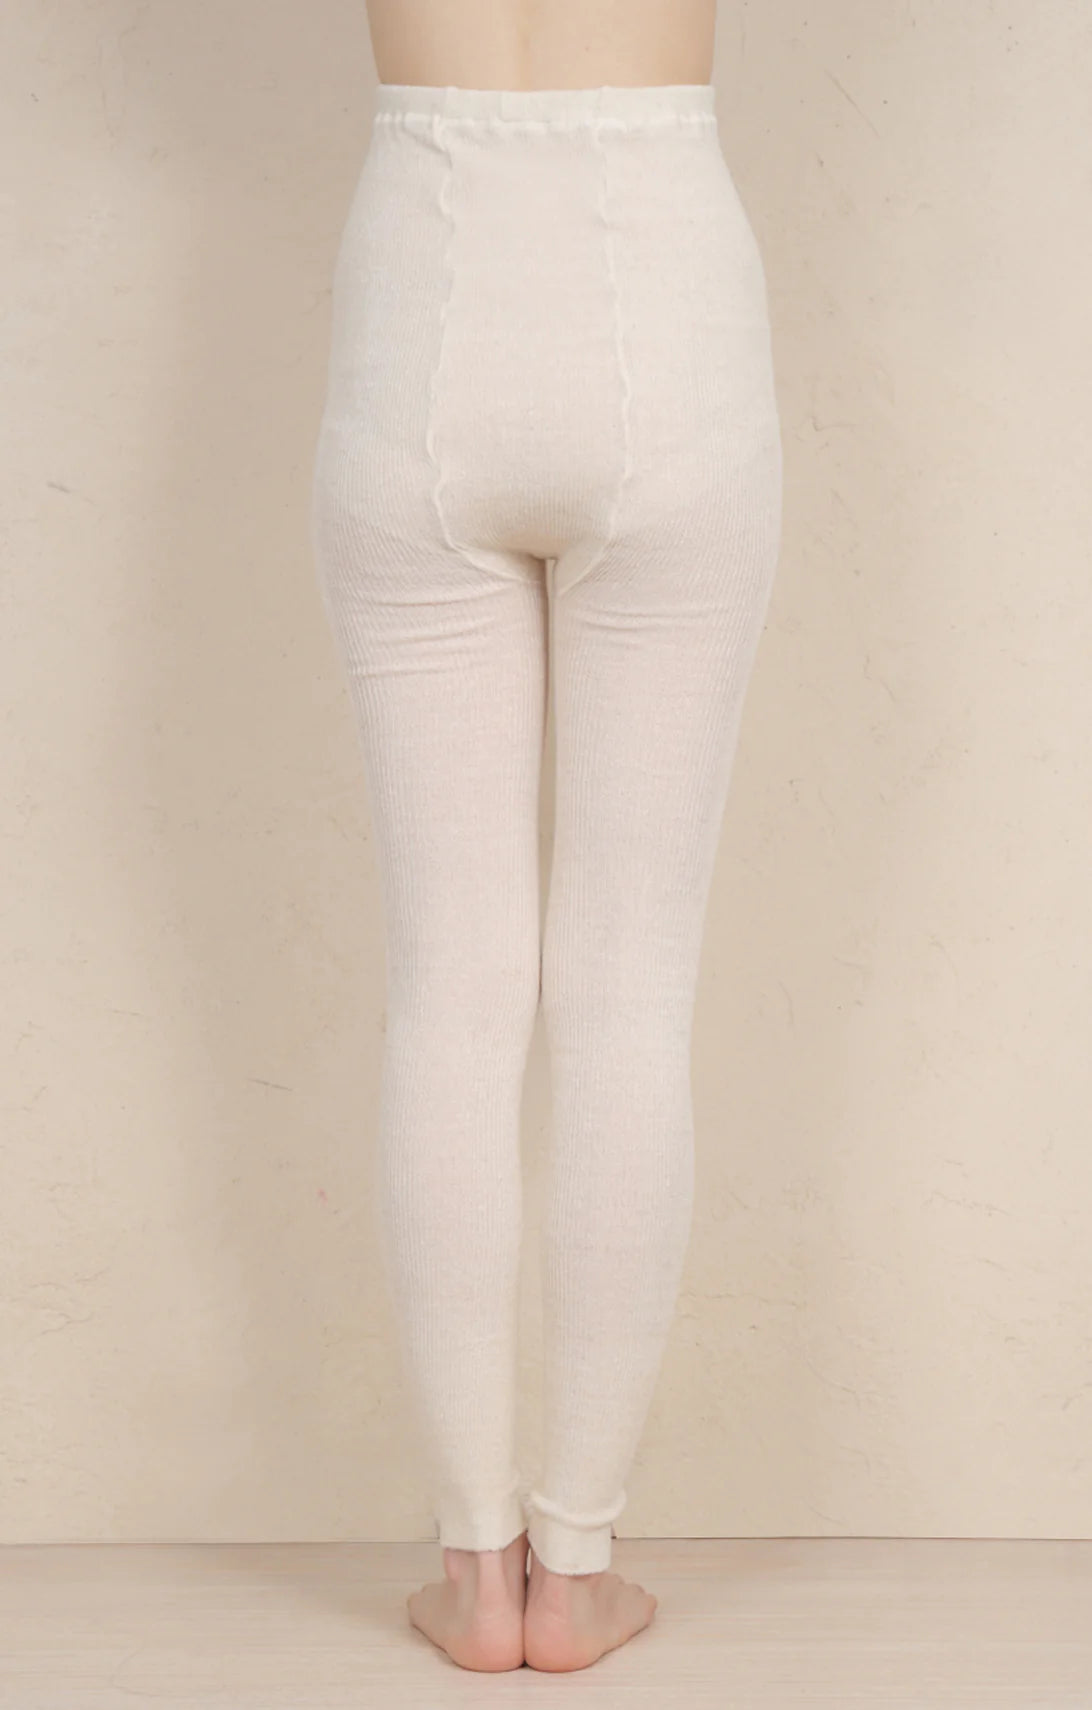 Back photo of Maarlie Hemp's product name "Mother of Pearl" ORGANIC HEMP RIBBED LEGGINGS